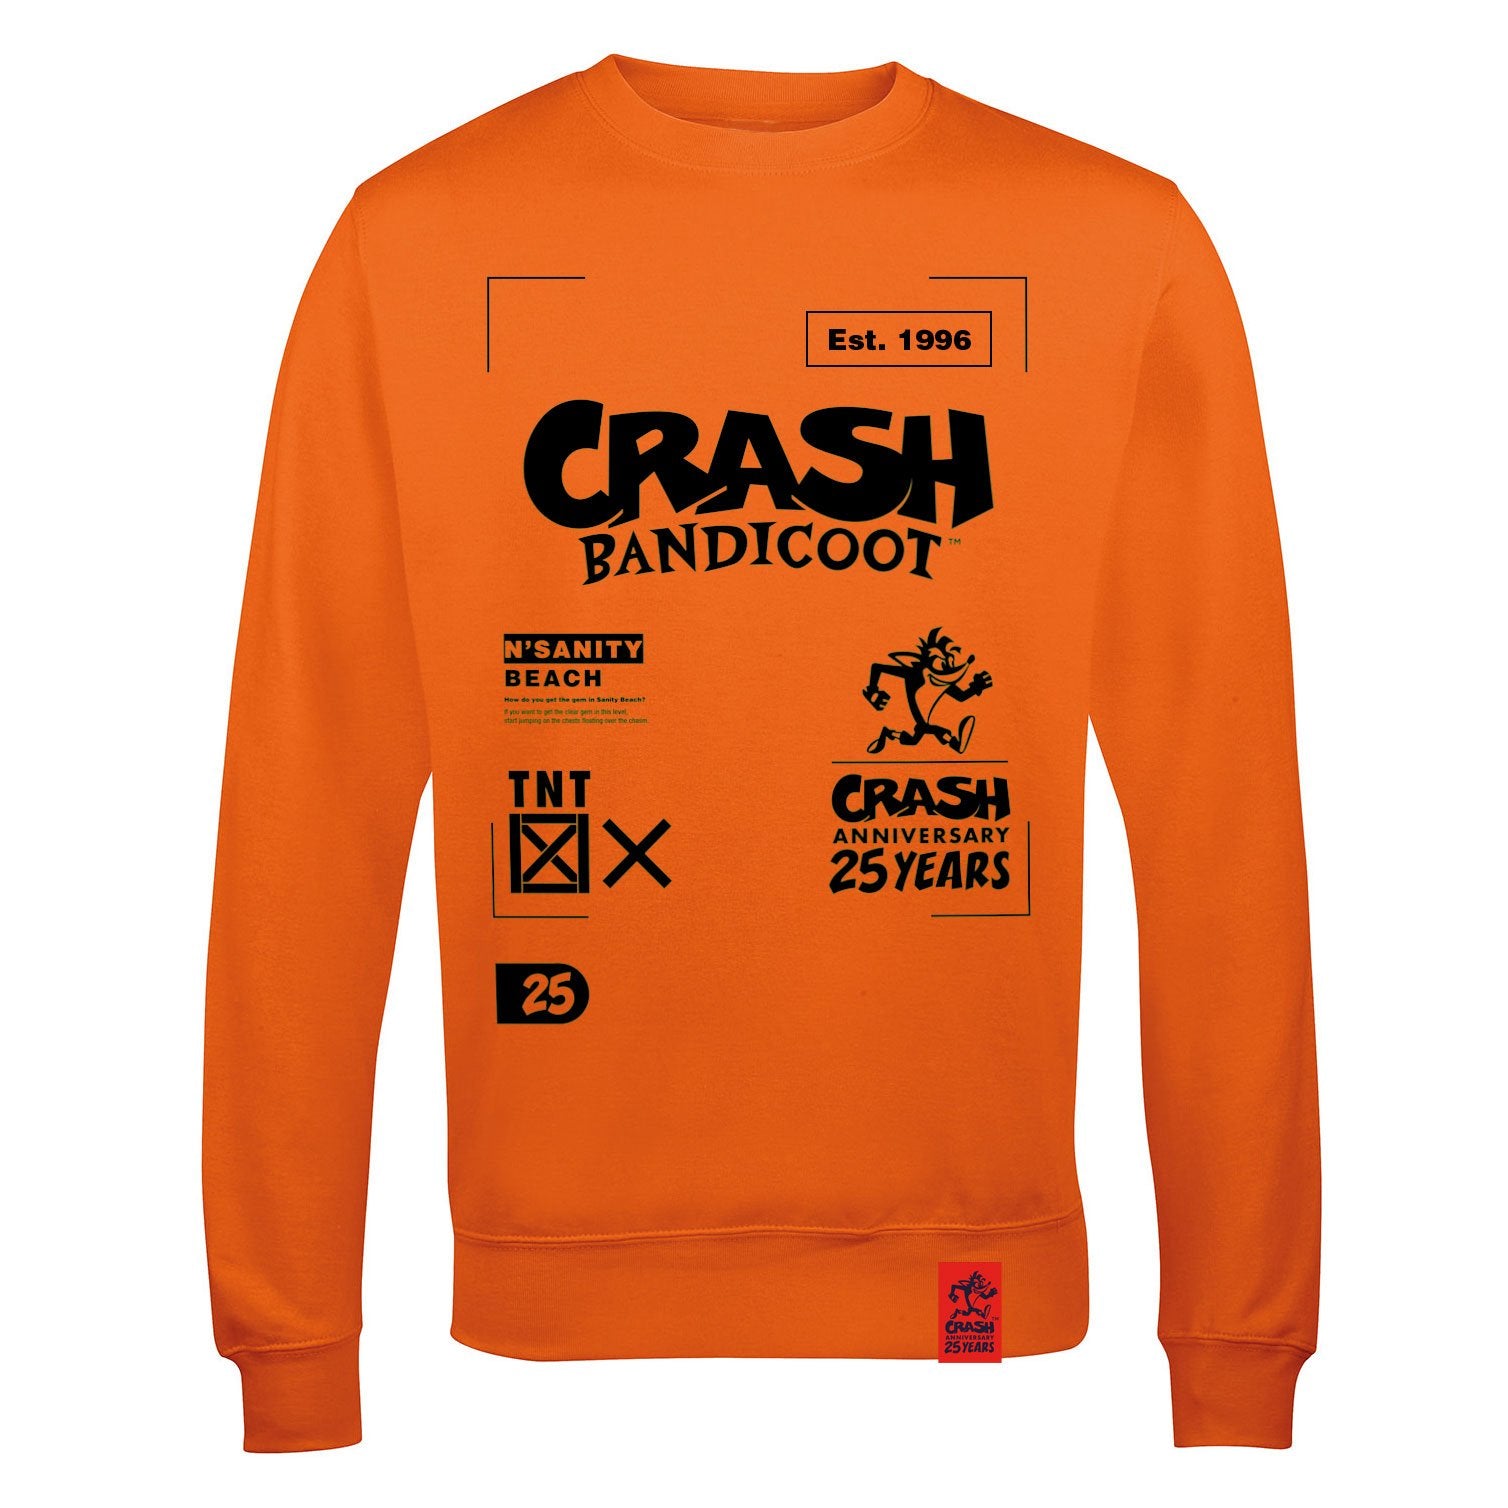 Crash Bandicoot N'Sanity Beach Mens Sweatshirt, Unisex Orange 25th Anniversary Jumper with Official Hem Label